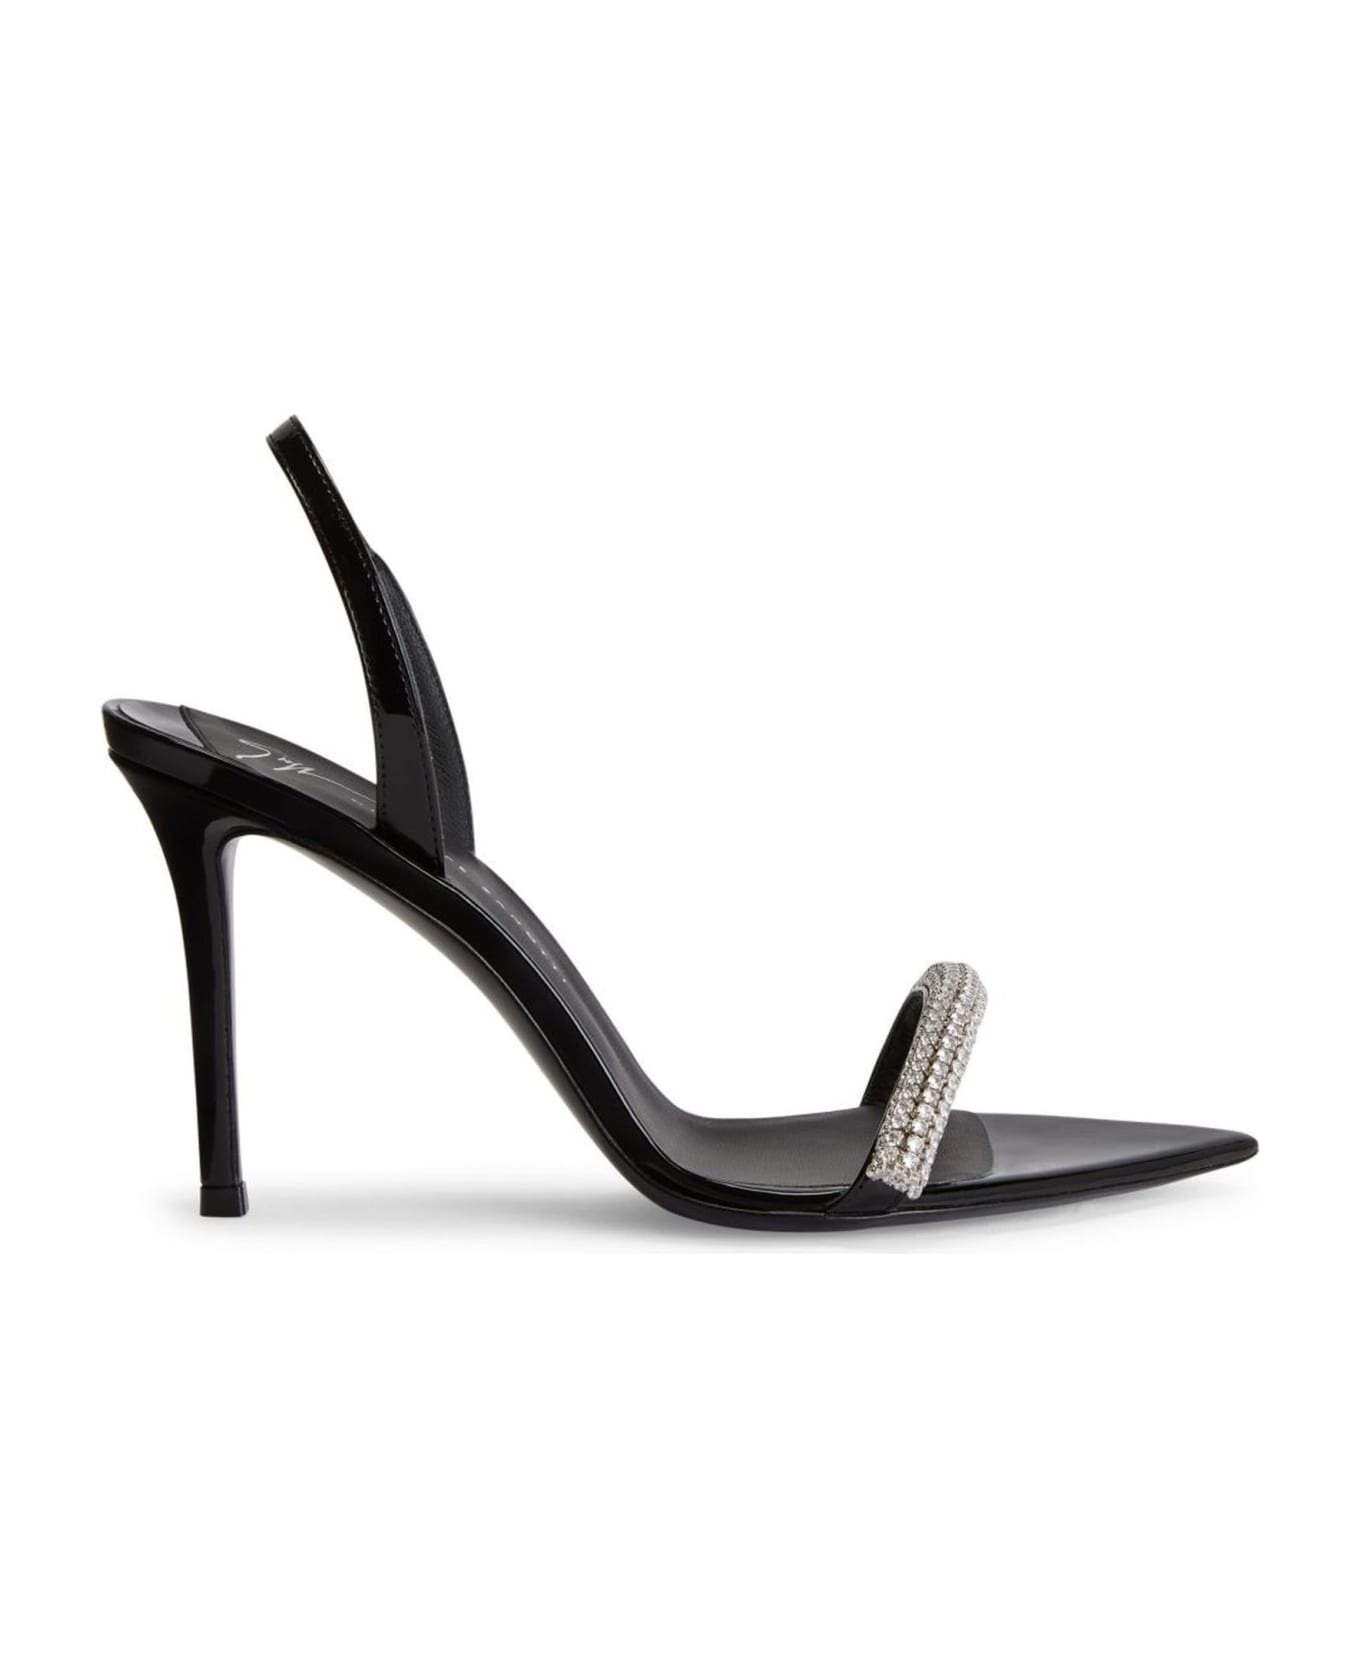 Giuseppe Zanotti Black Patent Leather Slingback Sandals - Black